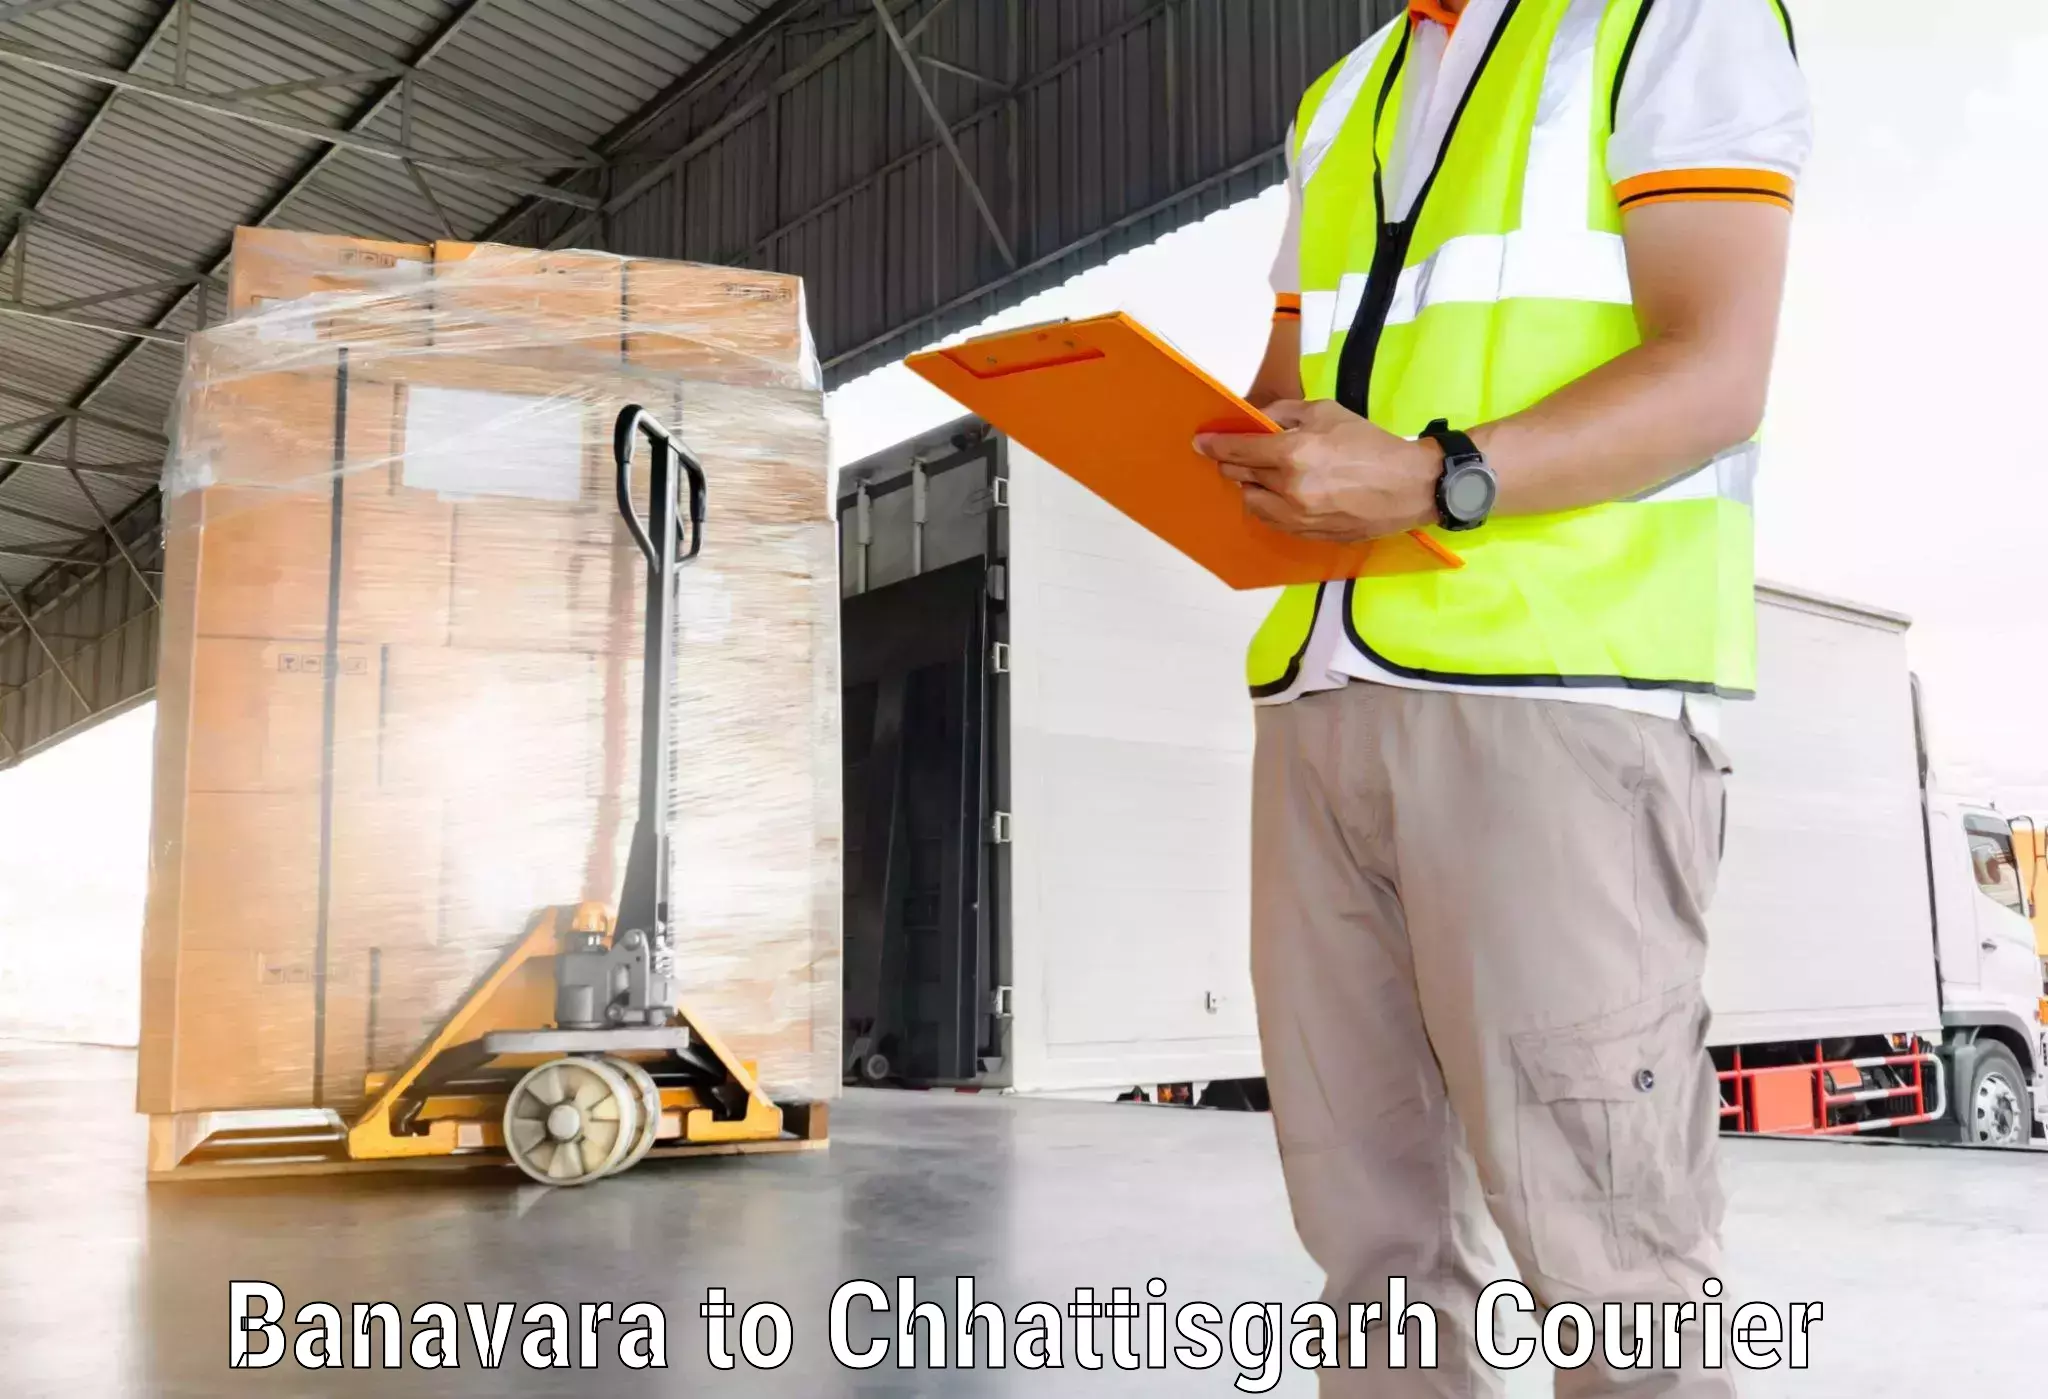 Global shipping solutions Banavara to Korea Chhattisgarh